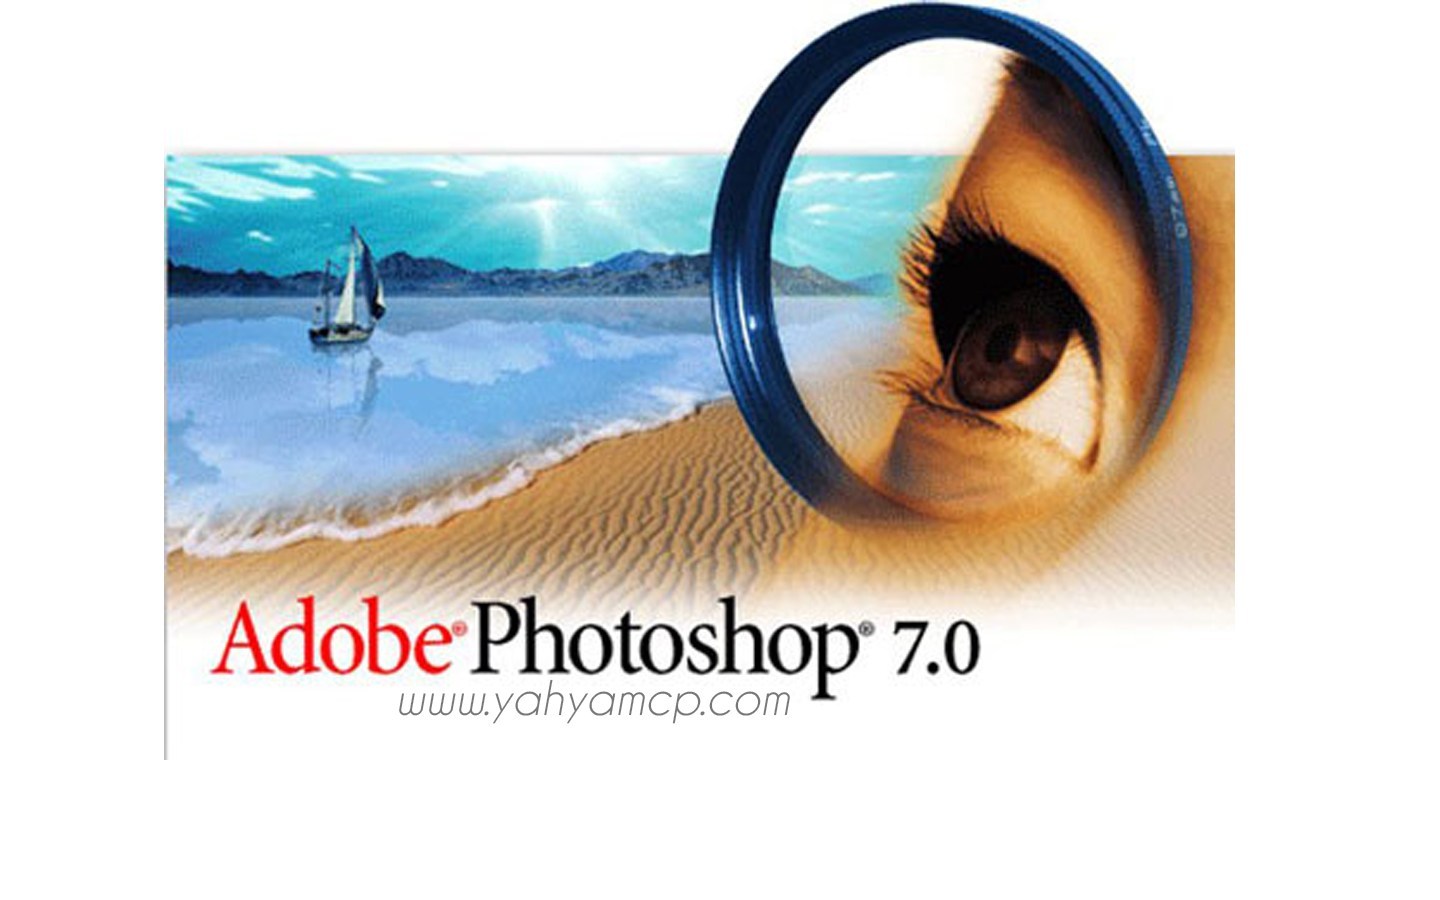 adobe photoshop free download for windows 10 setup file